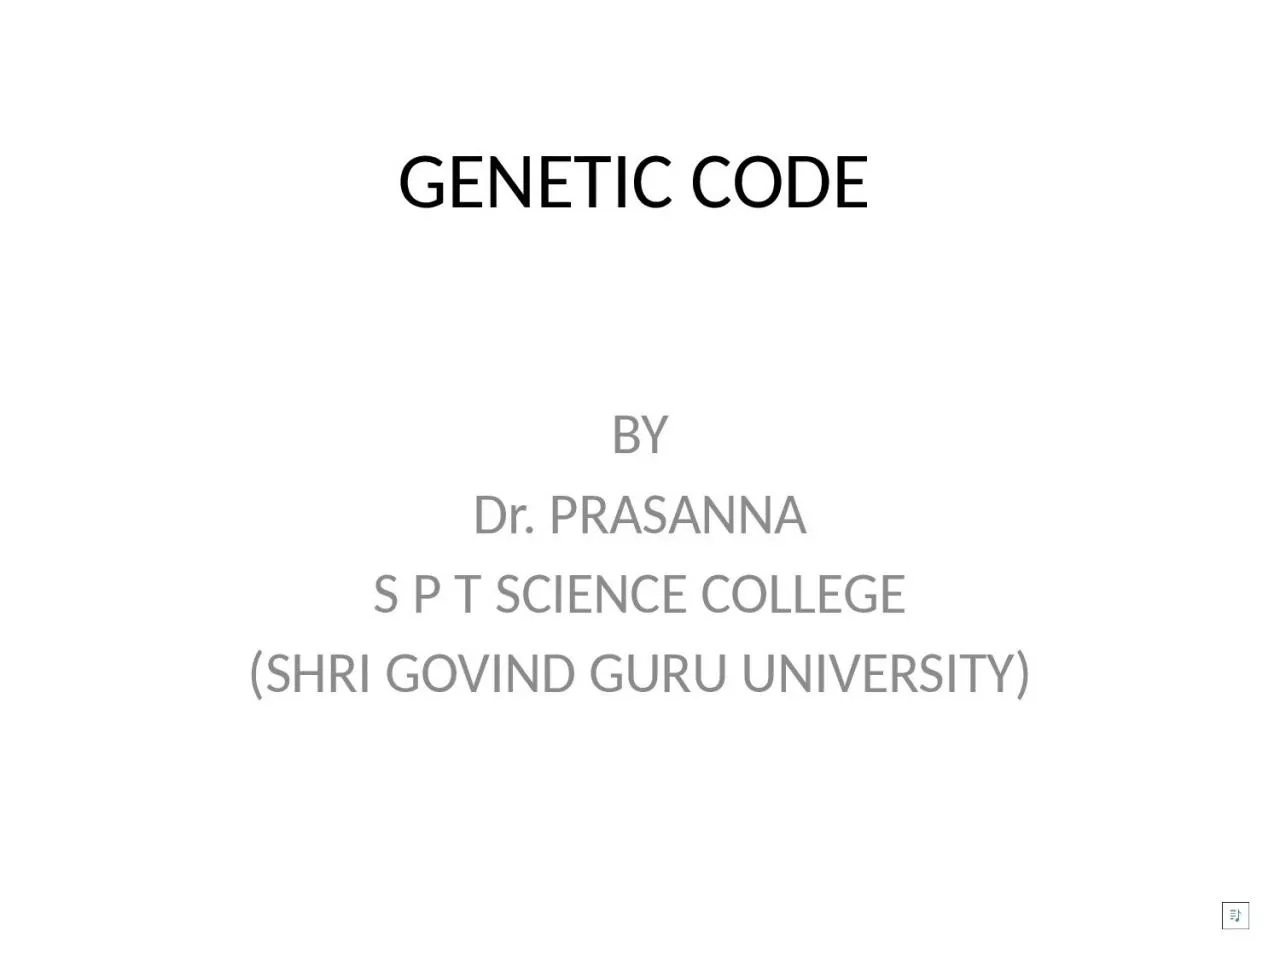 GENETIC CODE BY Dr. PRASANNA